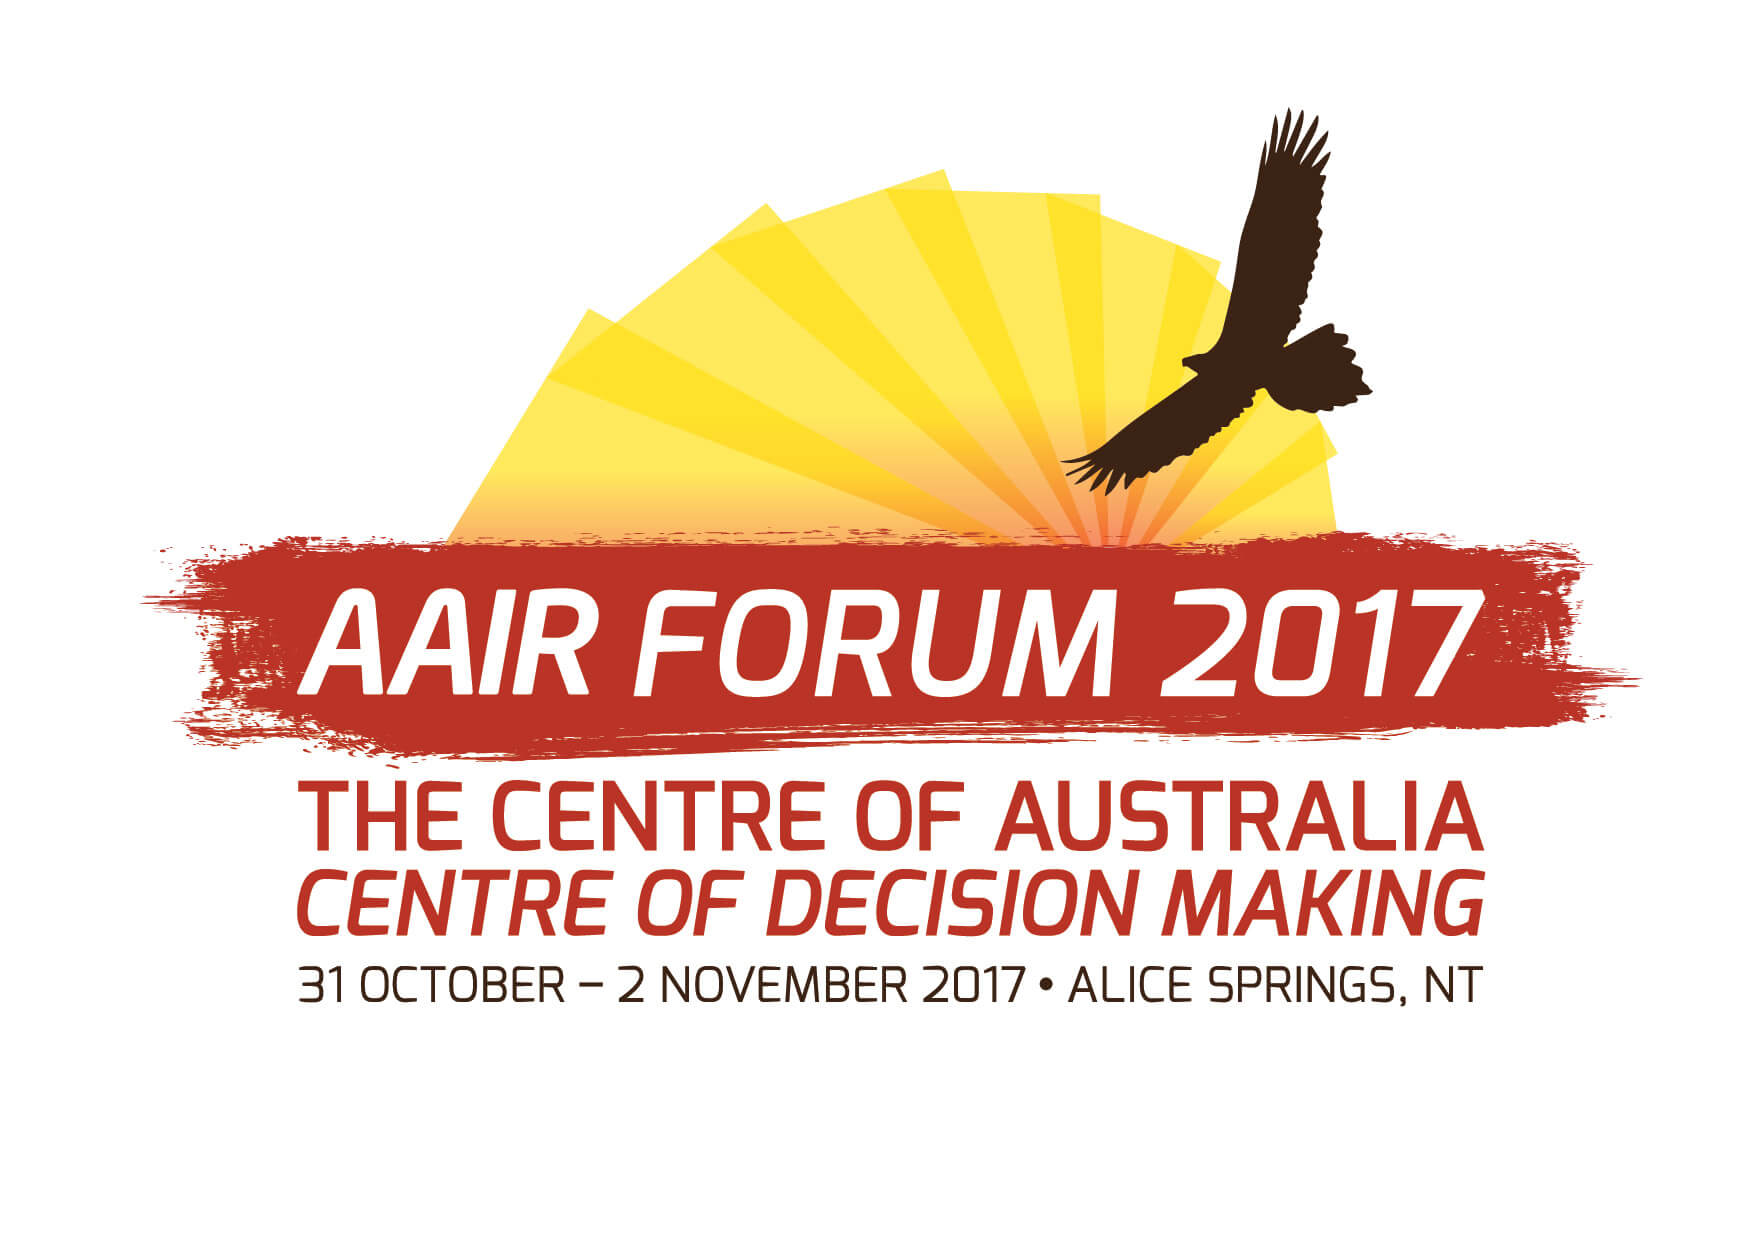 AAIR Forum 2017 logo showing a bird flying through the sun